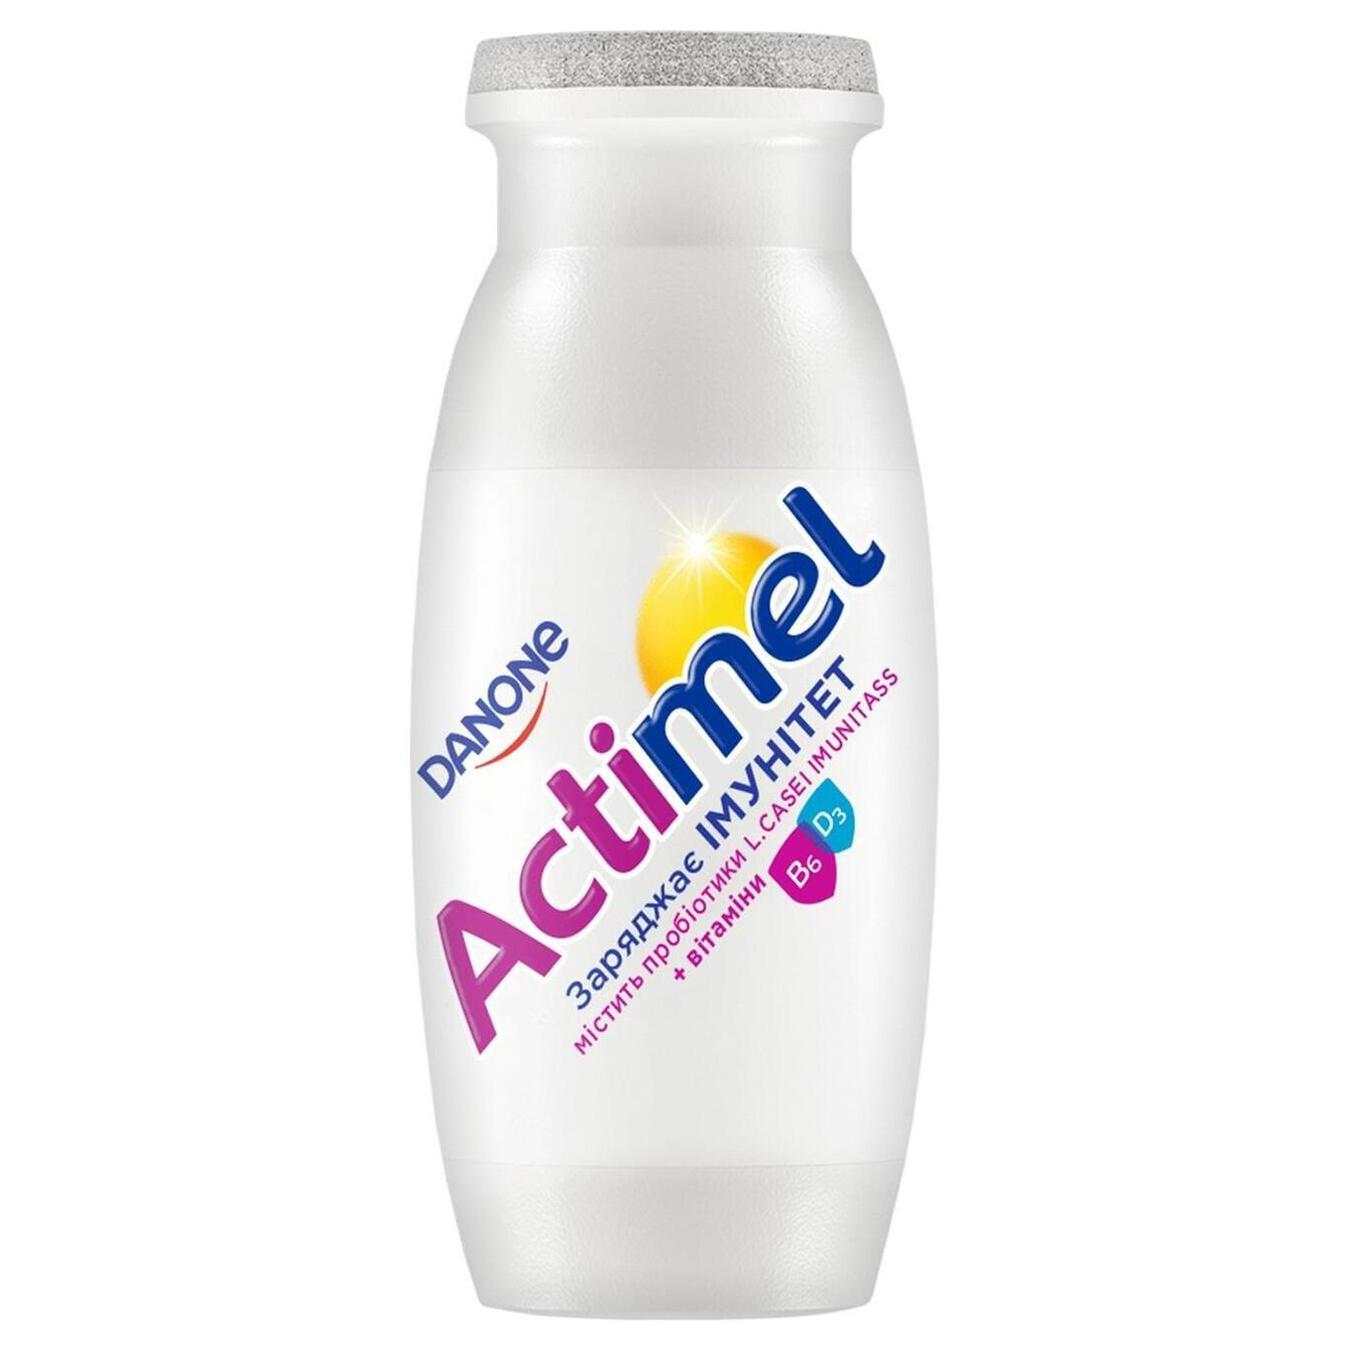 Sour milk product Actimel sweet 1.5% 100g